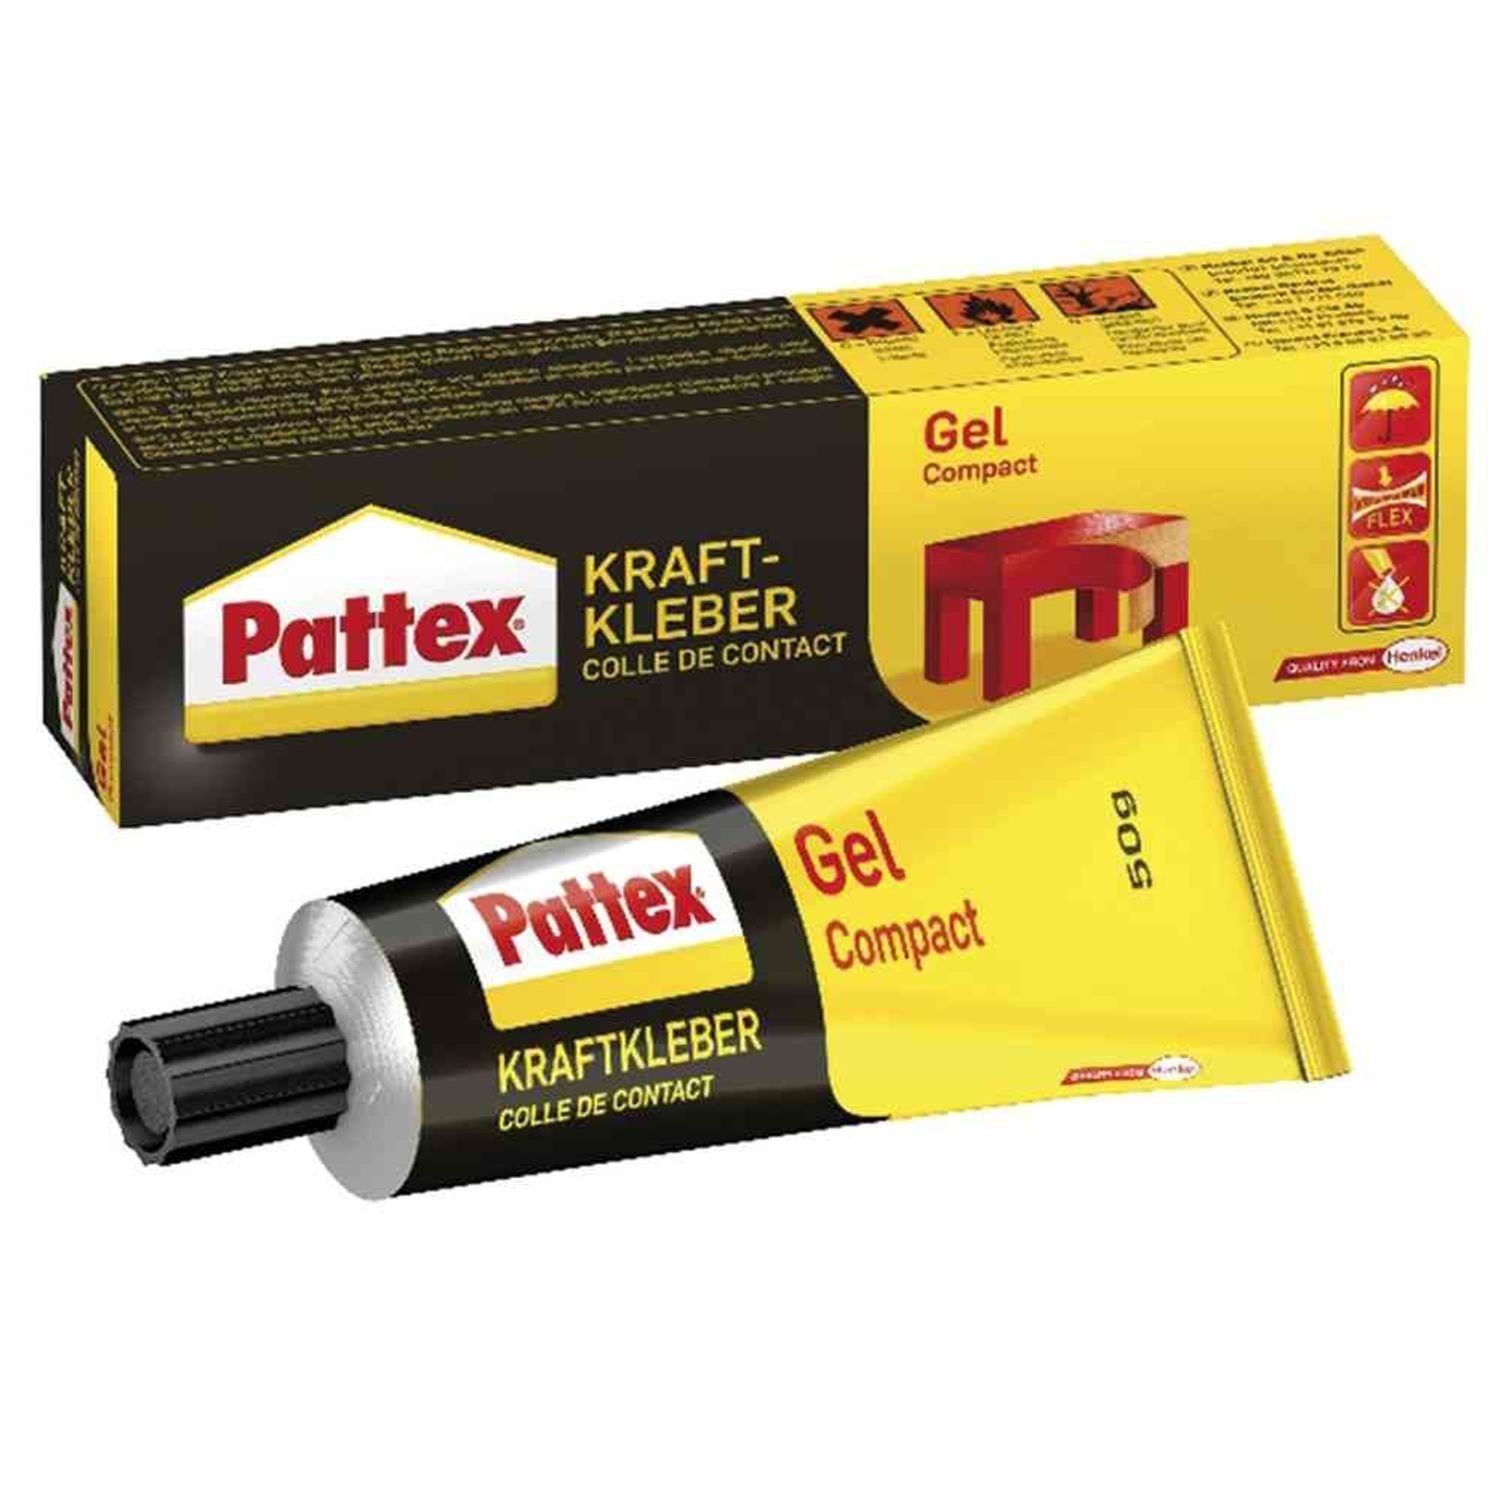 Pattex Klebstoff Kraftkleber Gel/Compact Tube à 50 g